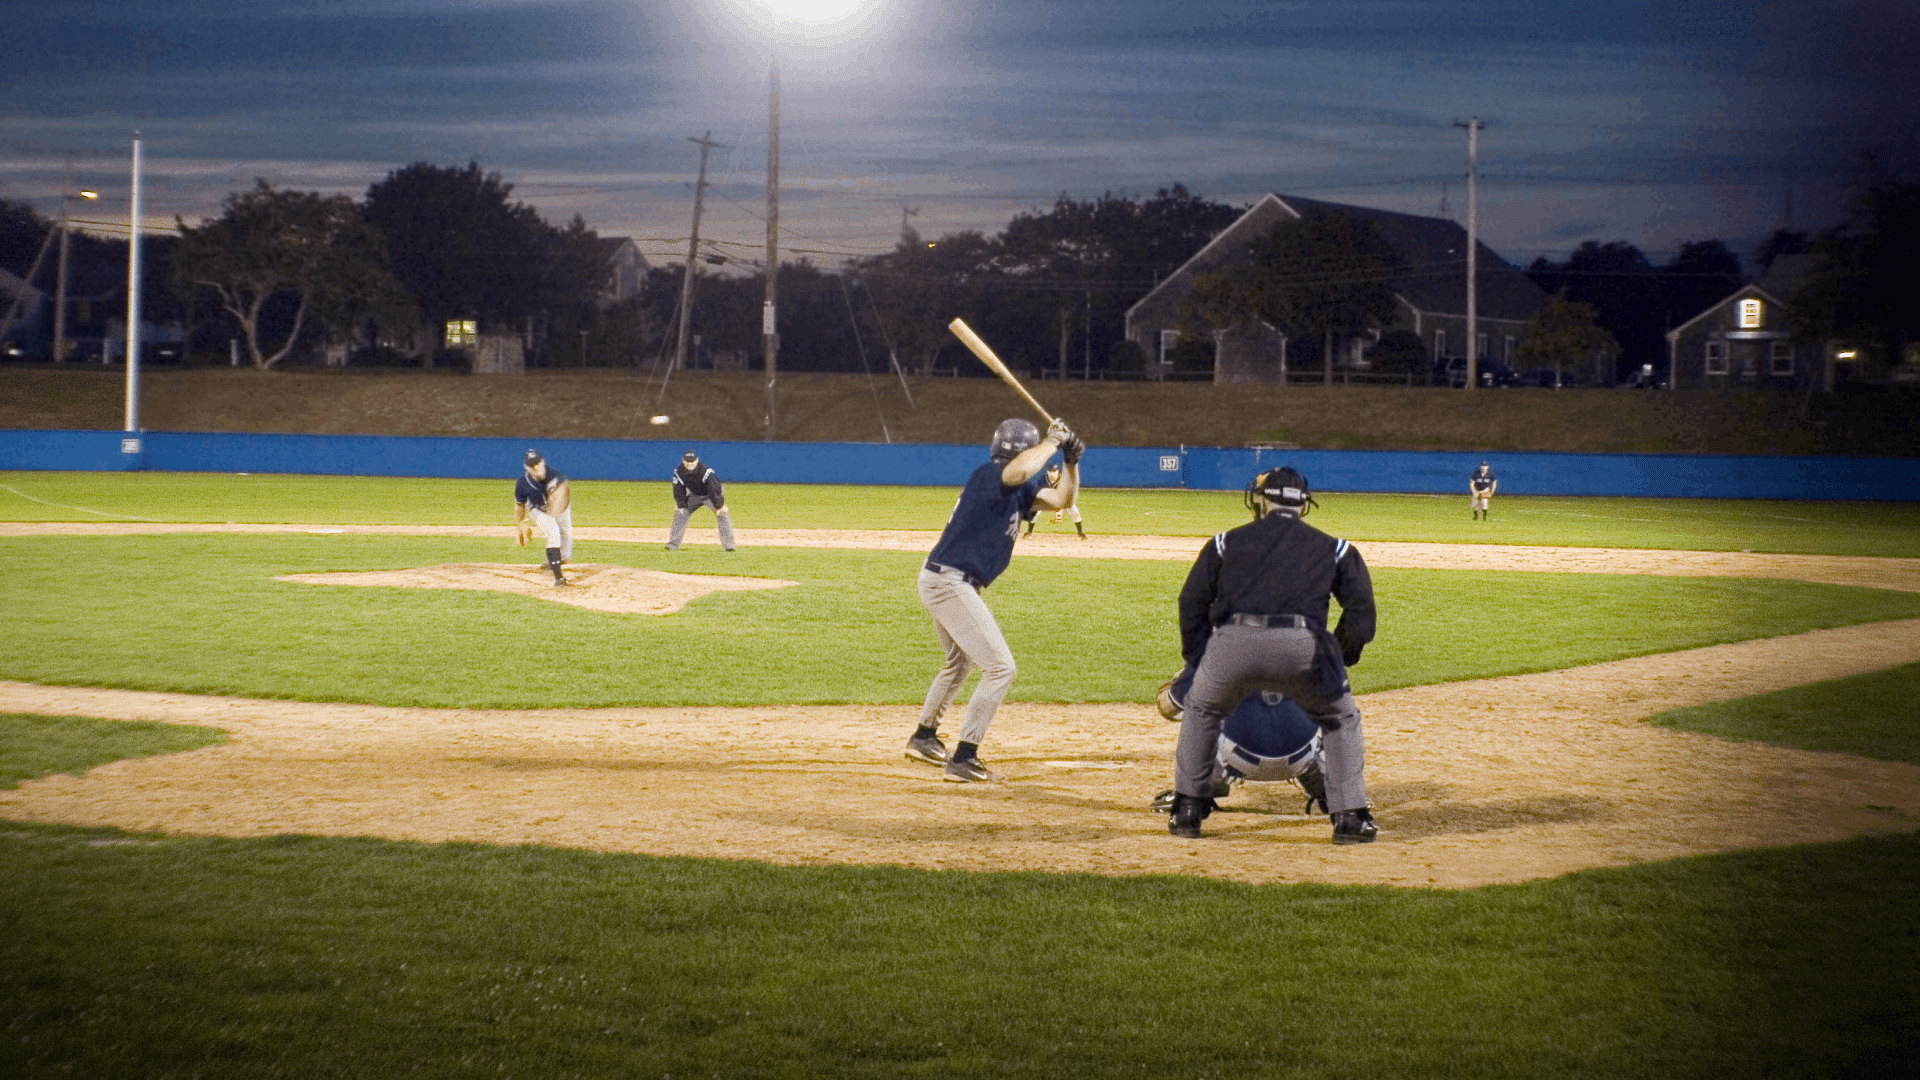 Cape Cod Baseball League shown baseball player on the baseball field